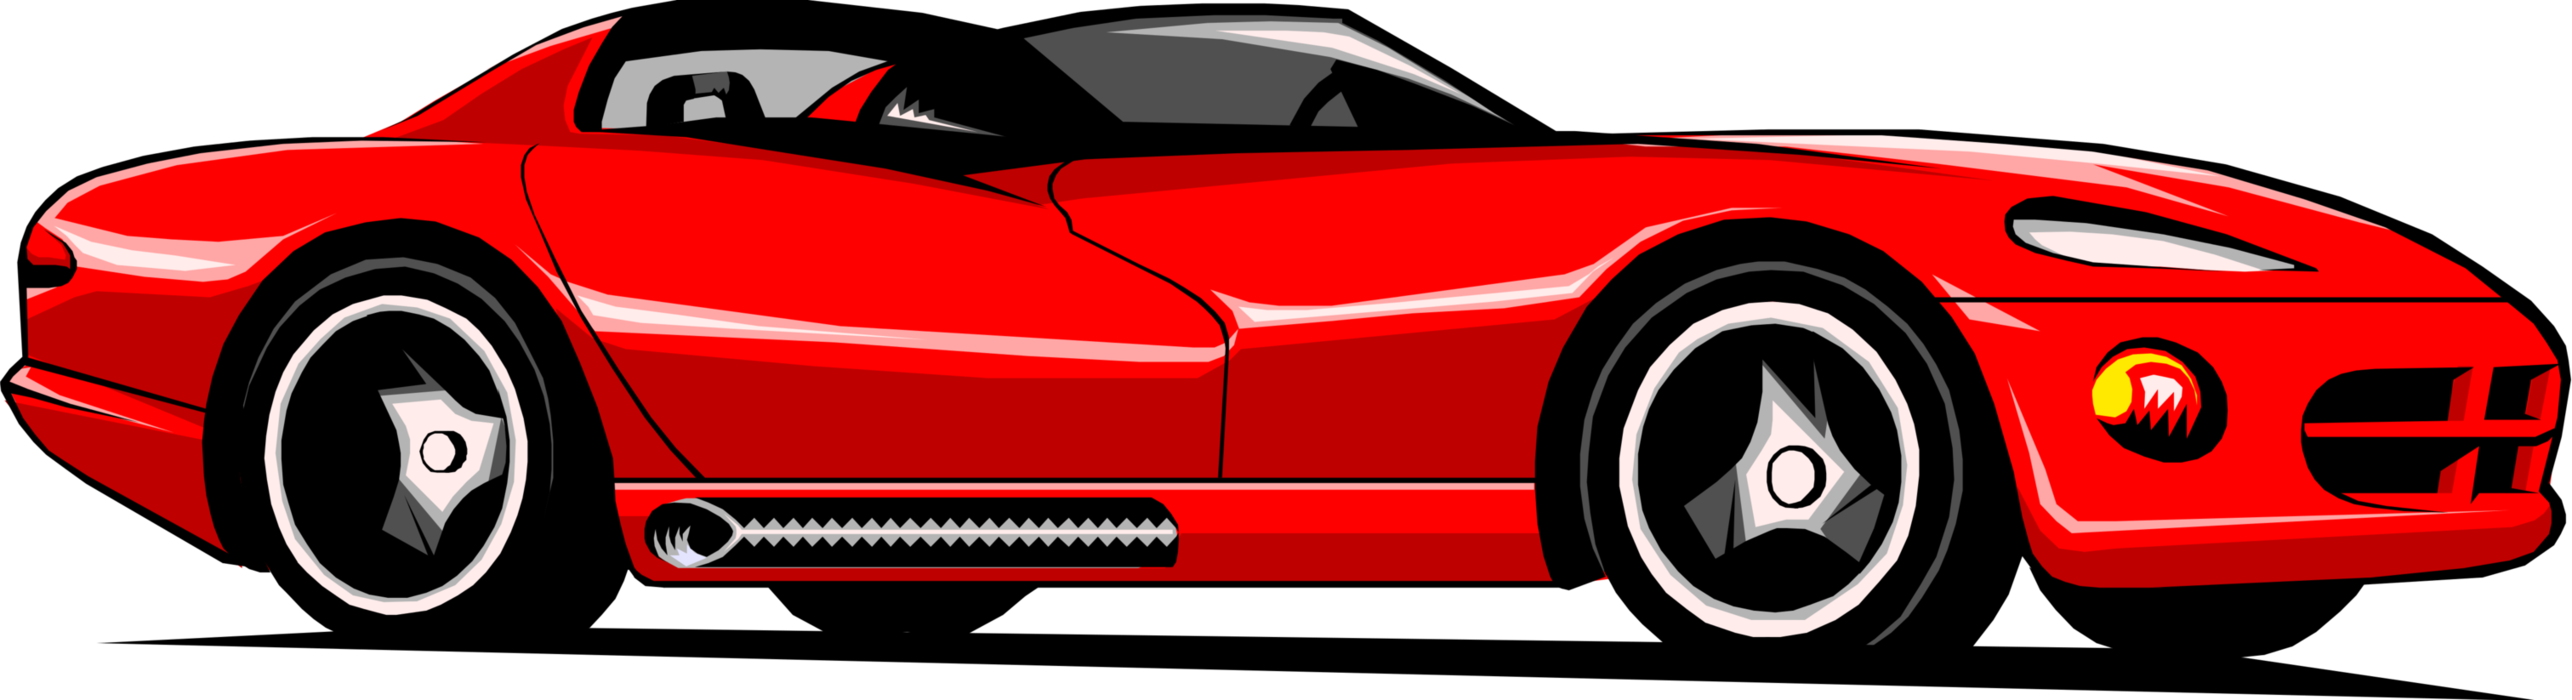 Vector Illustration of Viper Convertible Sports Car Automobile Motor Vehicle